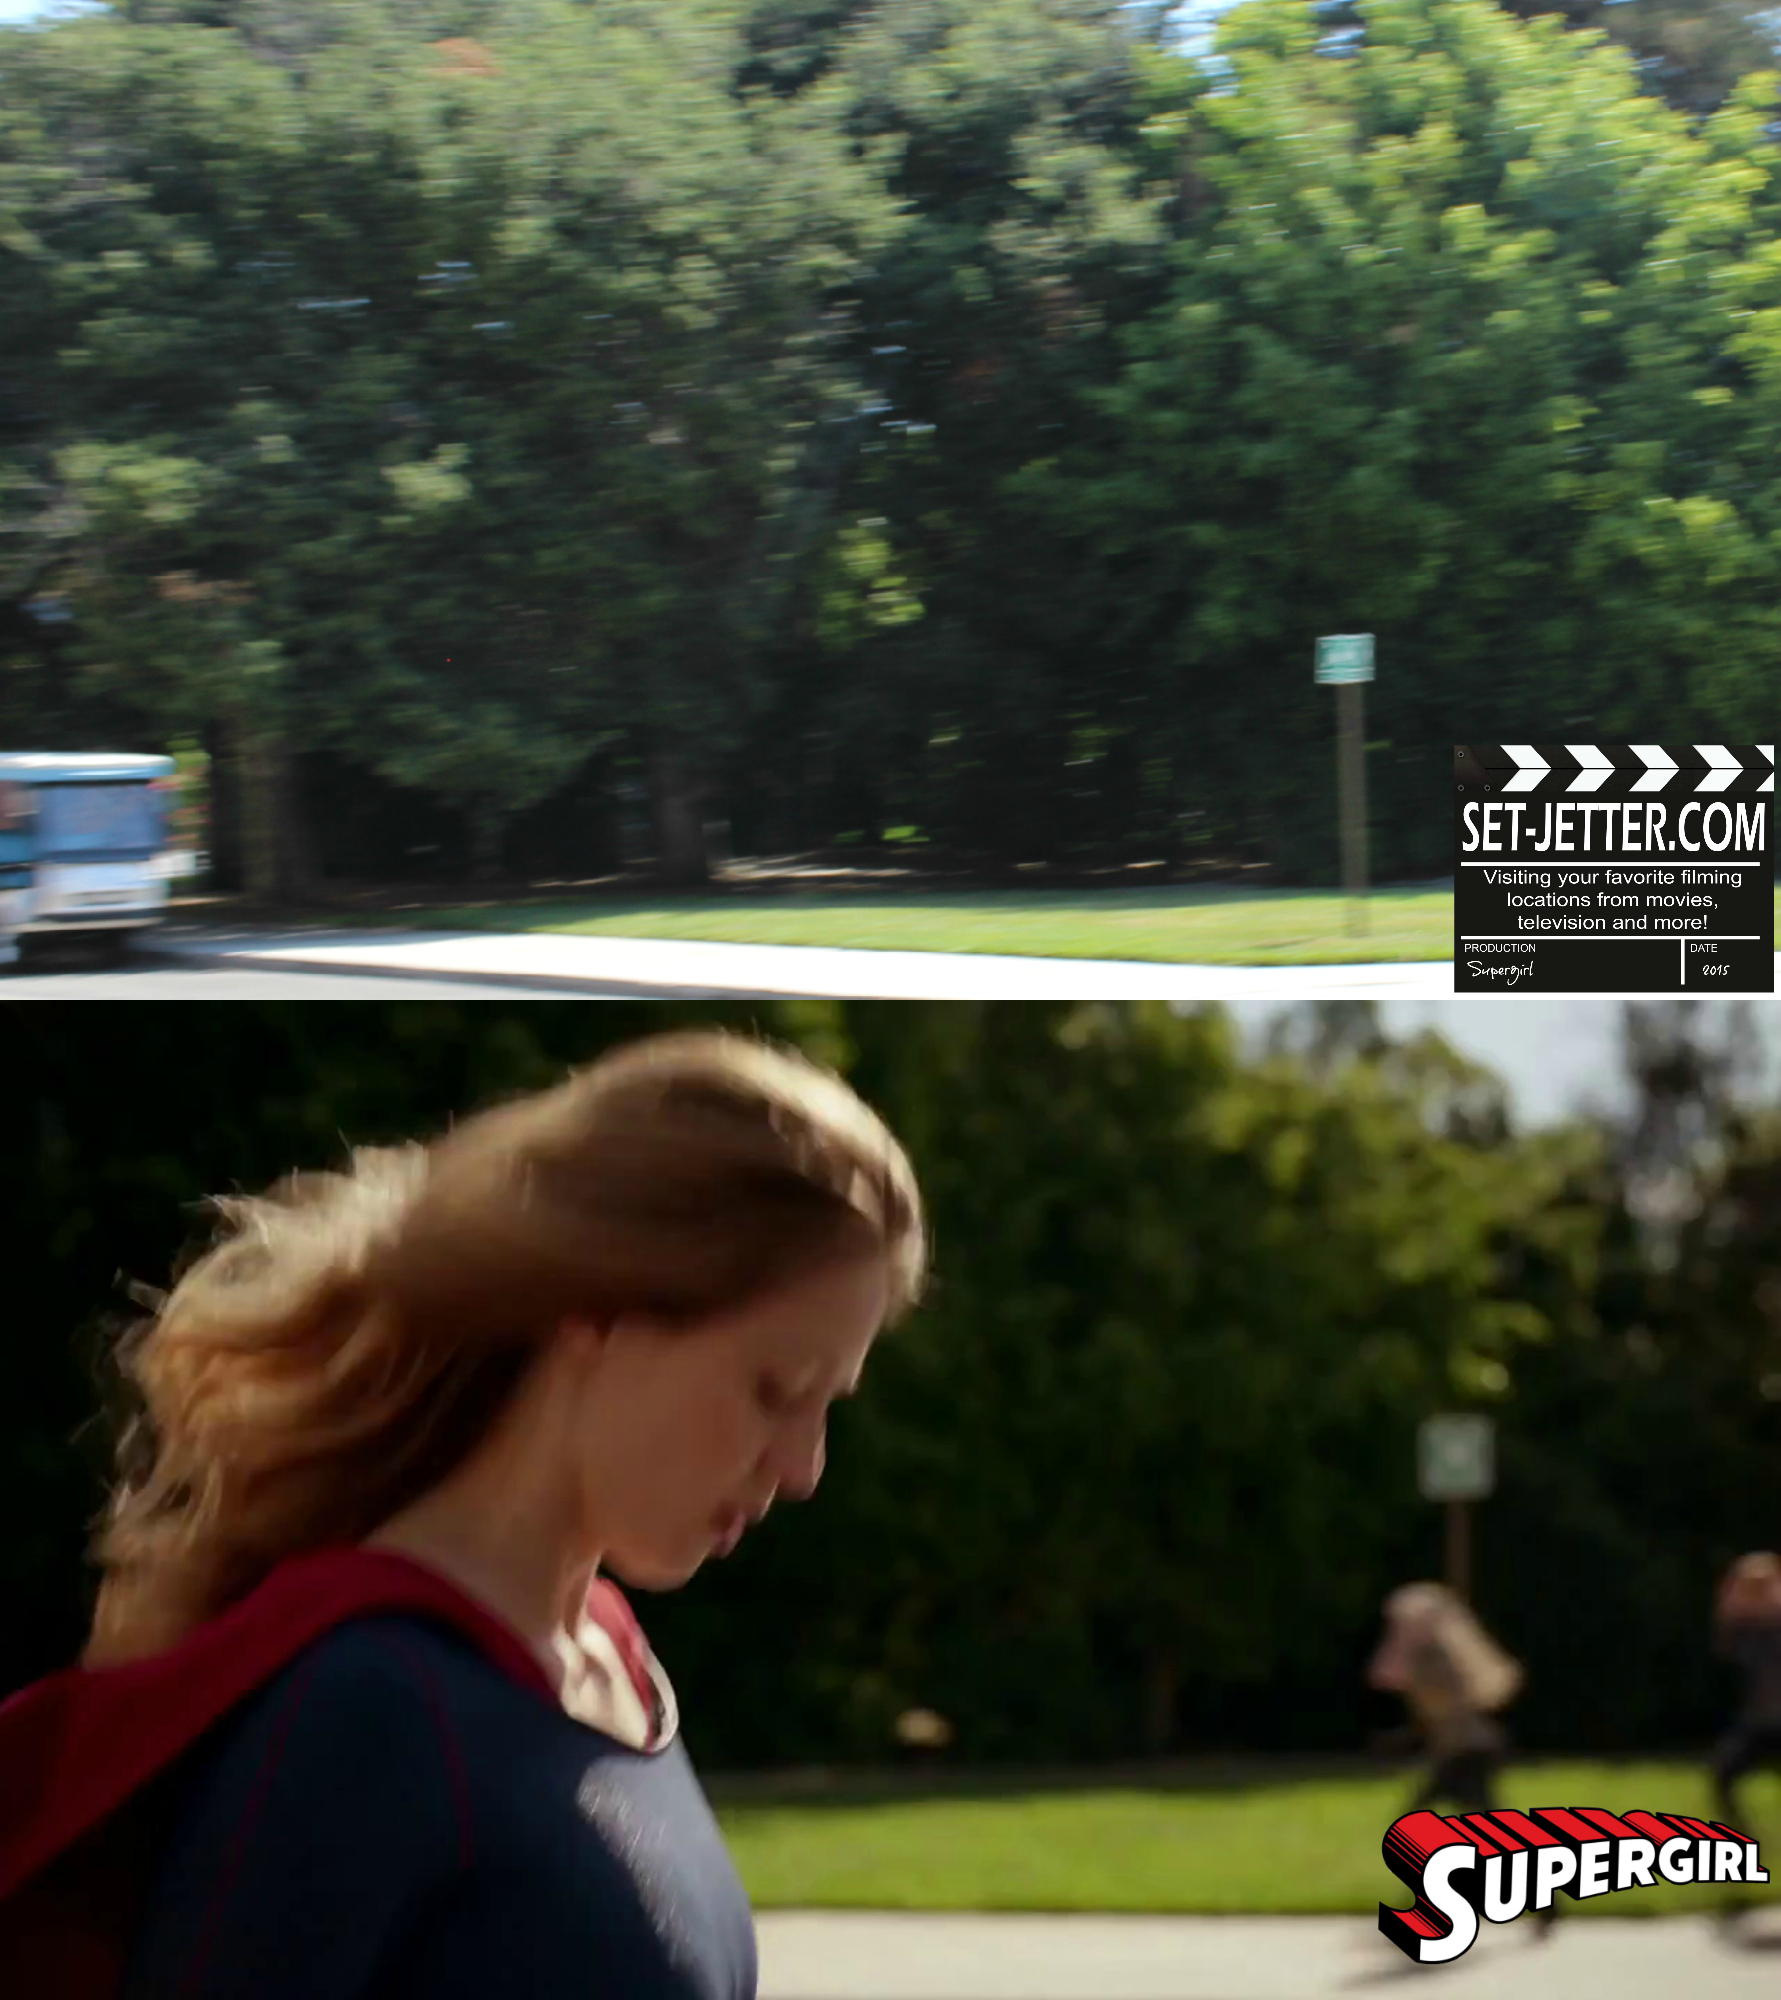 Supergirl comparison 24.jpg